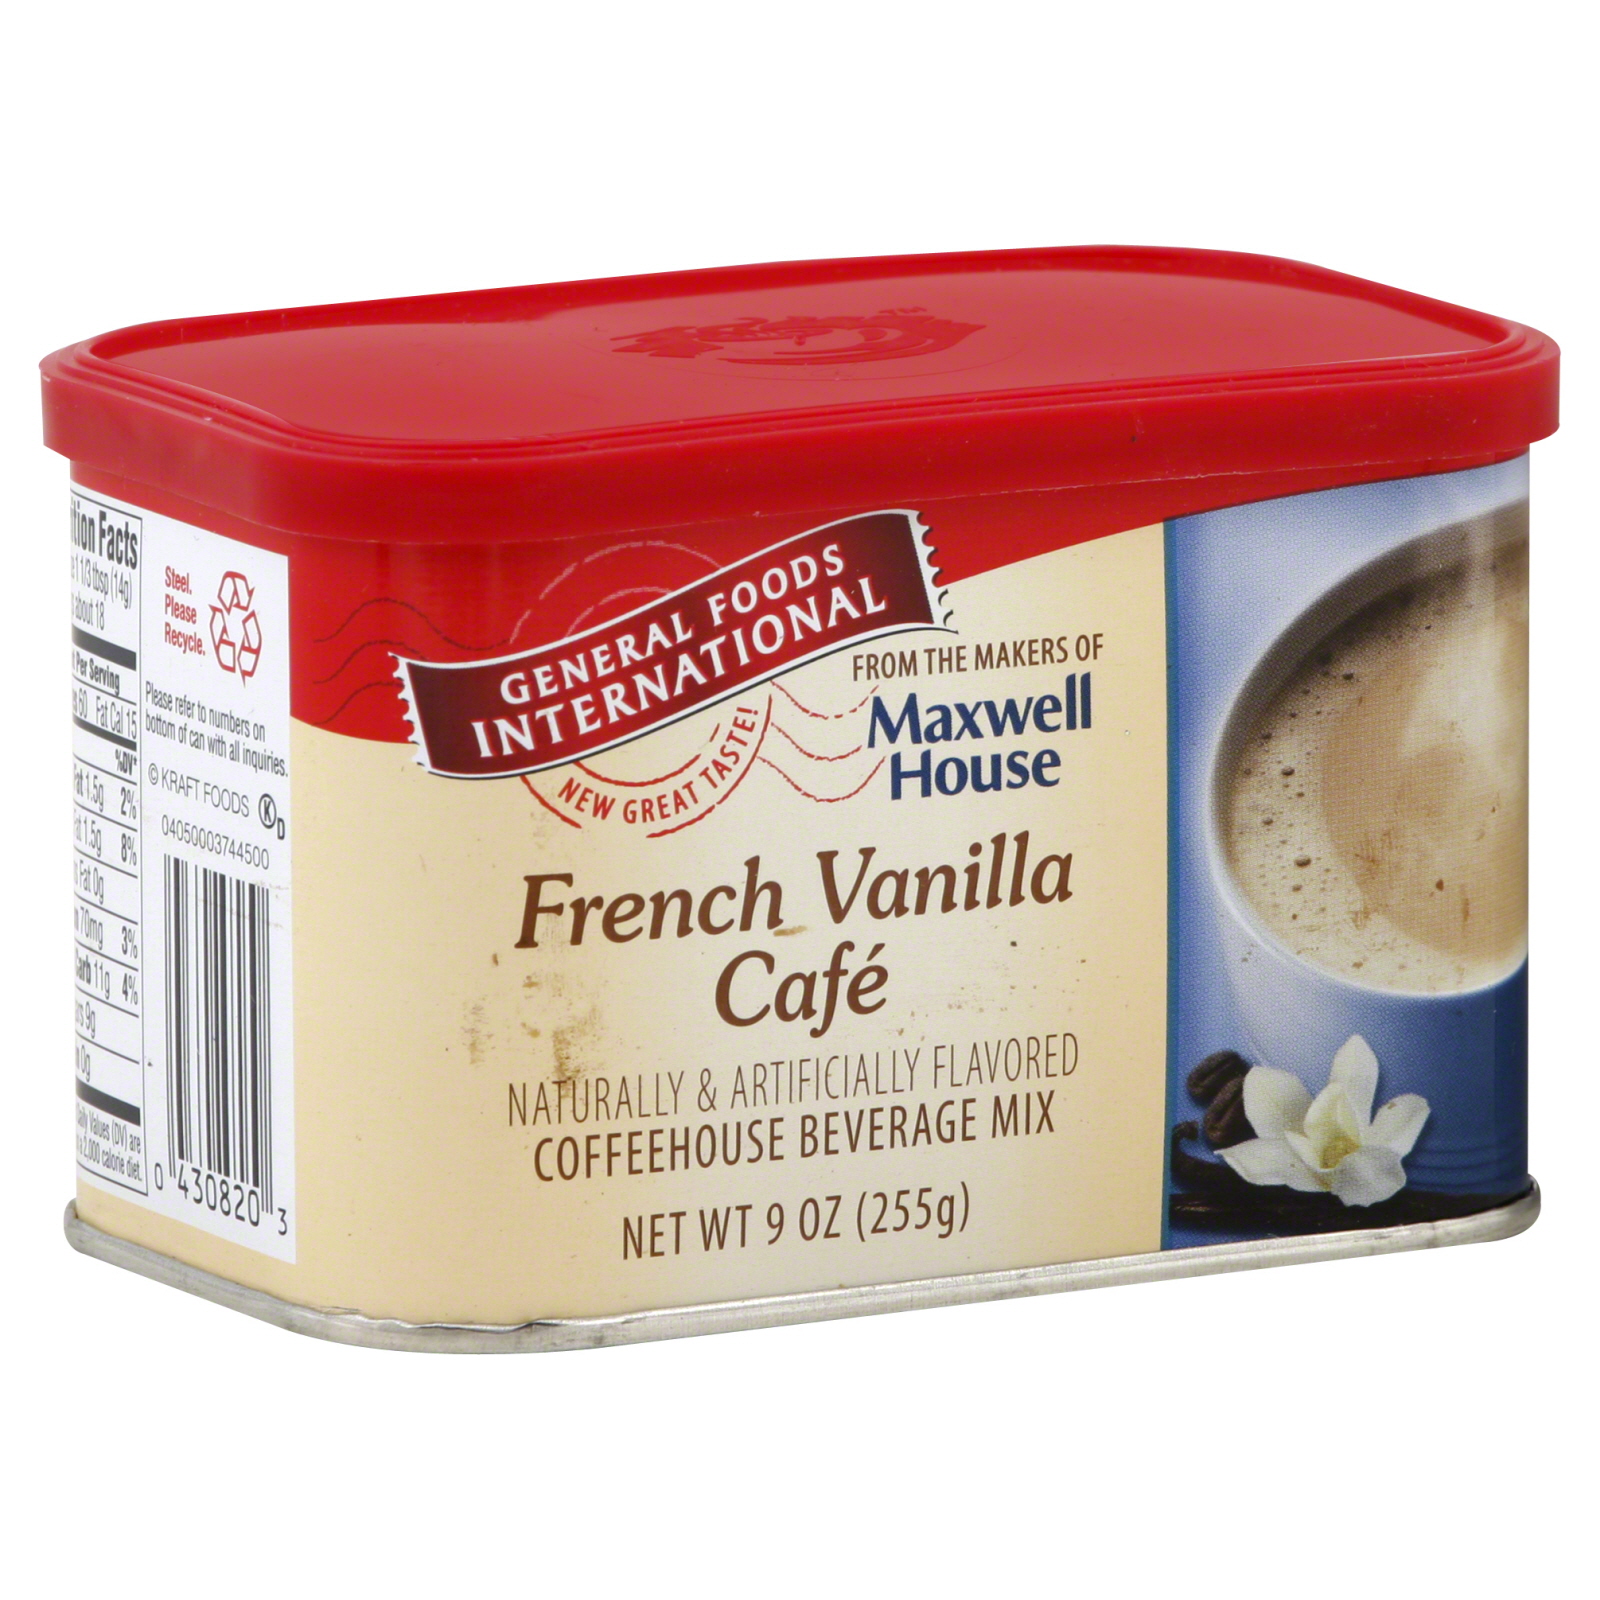 General Foods International Coffeehouse Beverage Mix, French Vanilla Cafe, 9 oz (255 g)